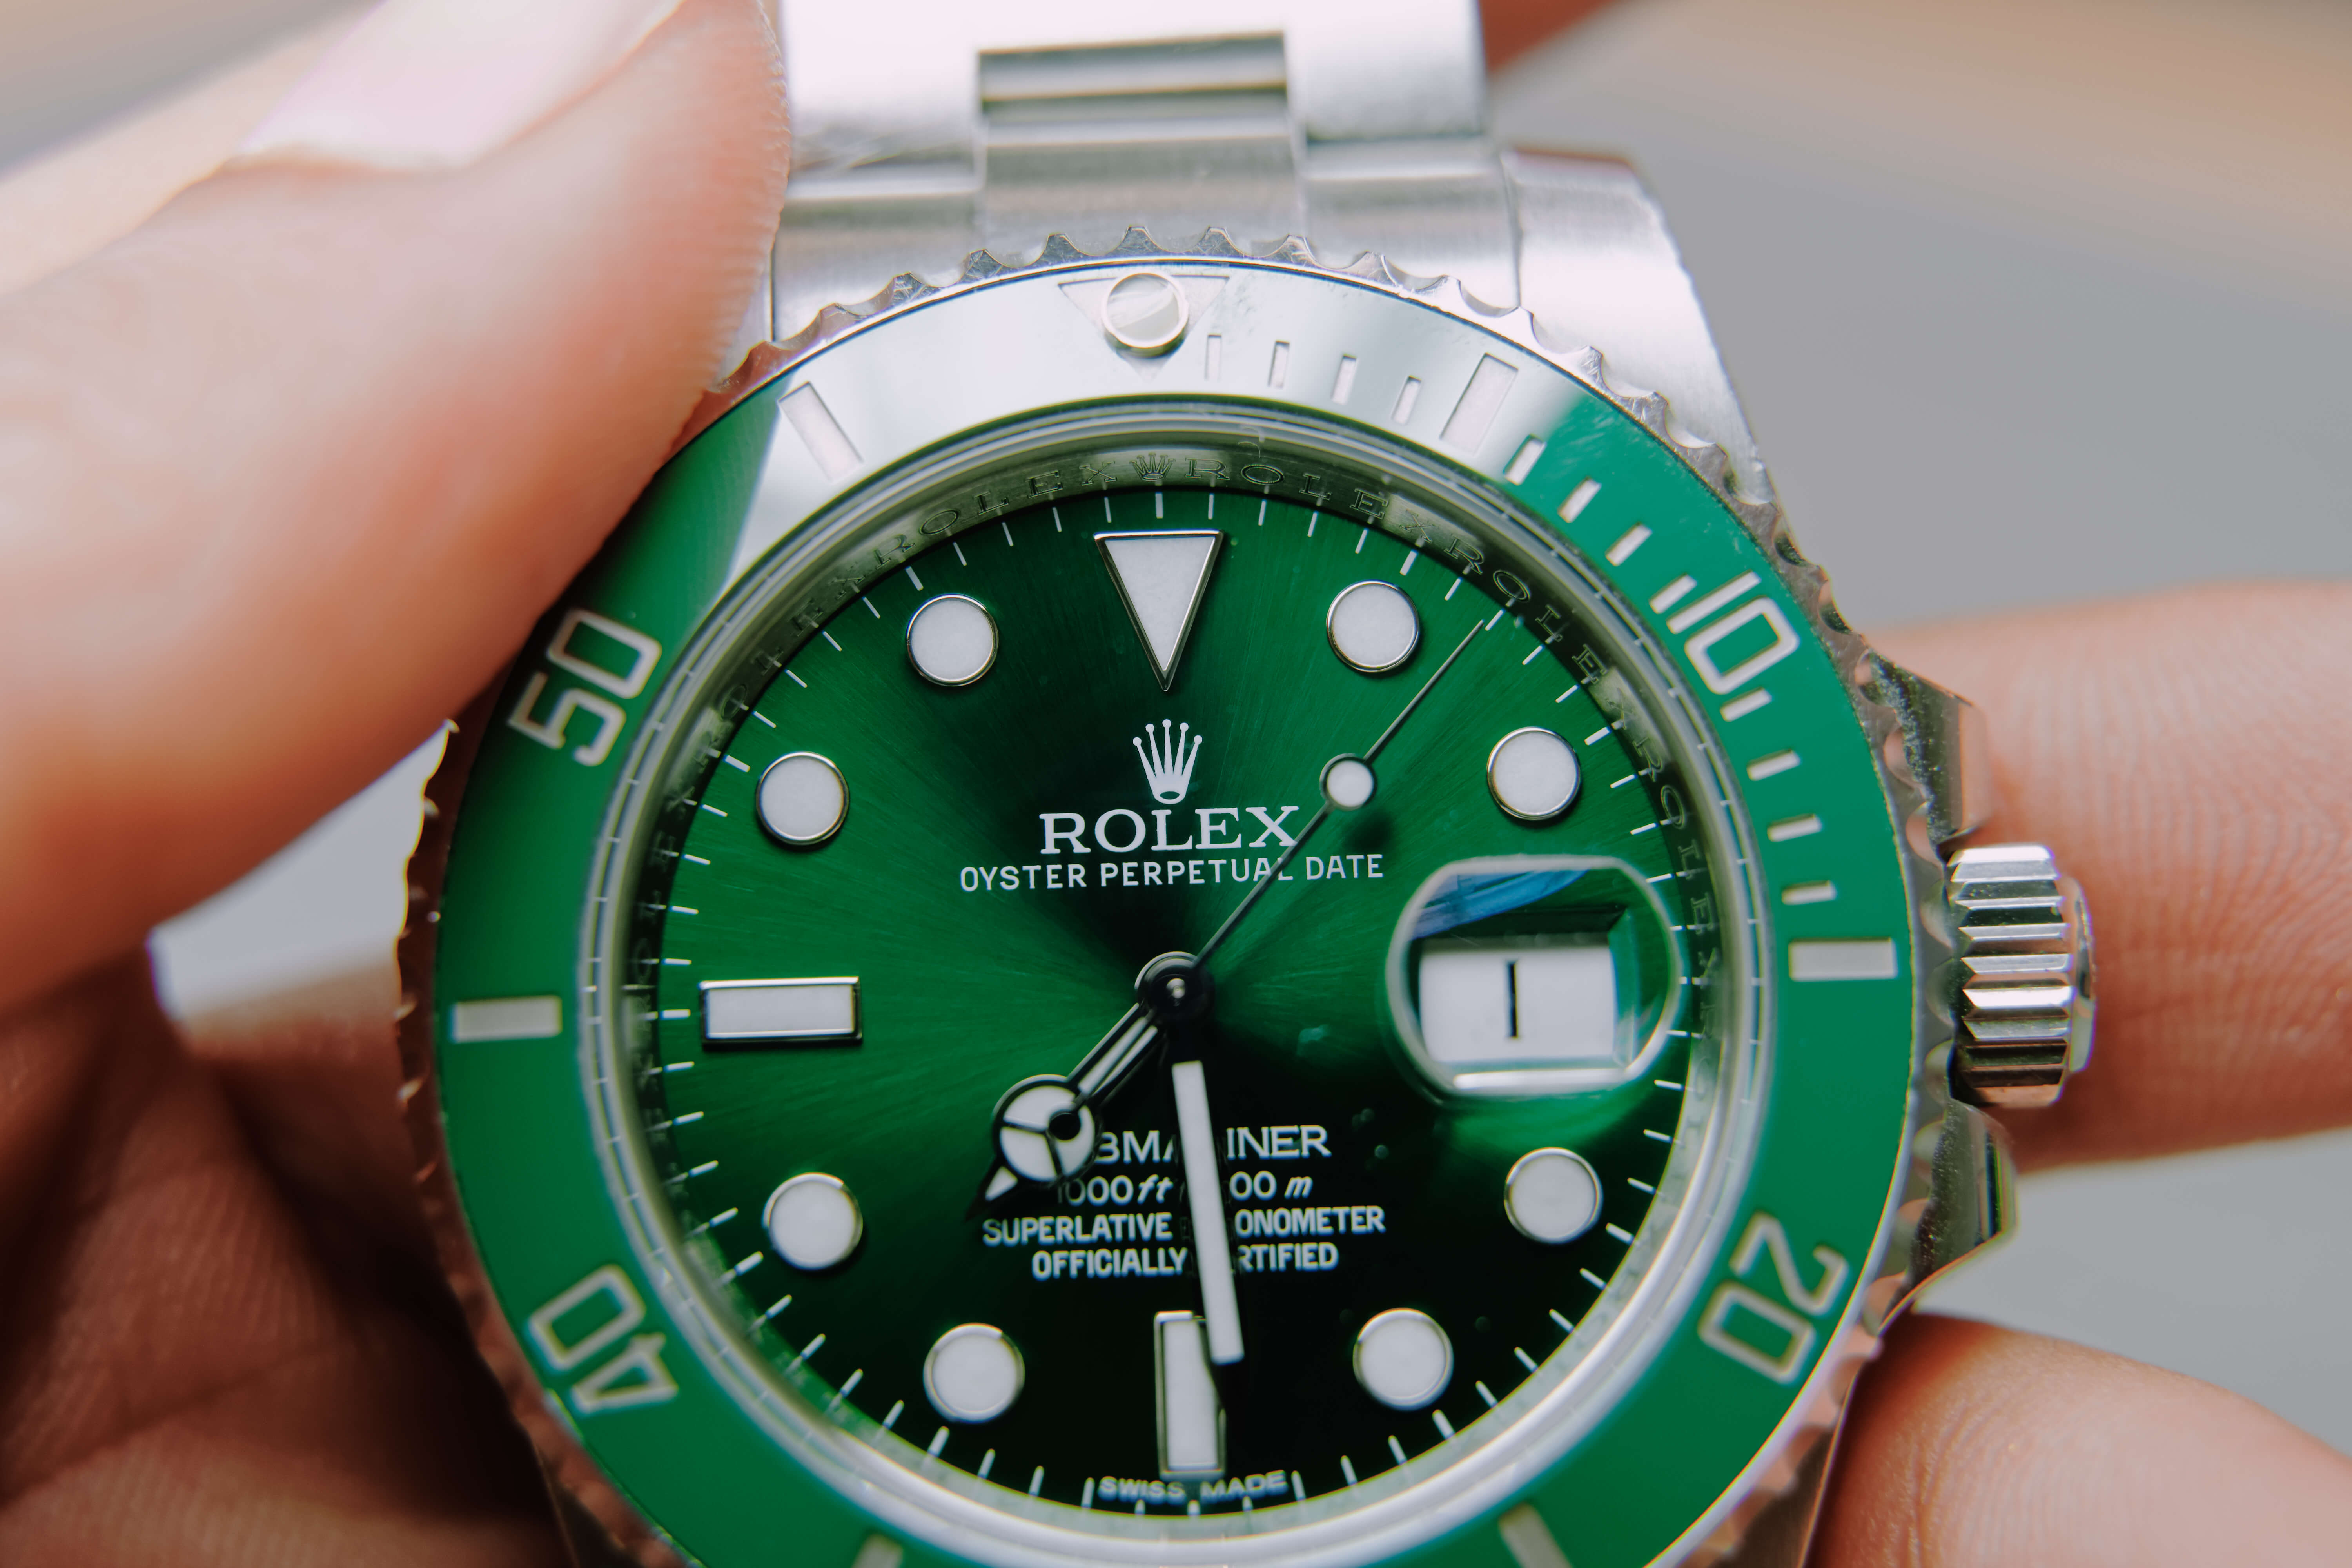 Hulk Rolex 116610LV Submariner Stainless Steel Watch Review